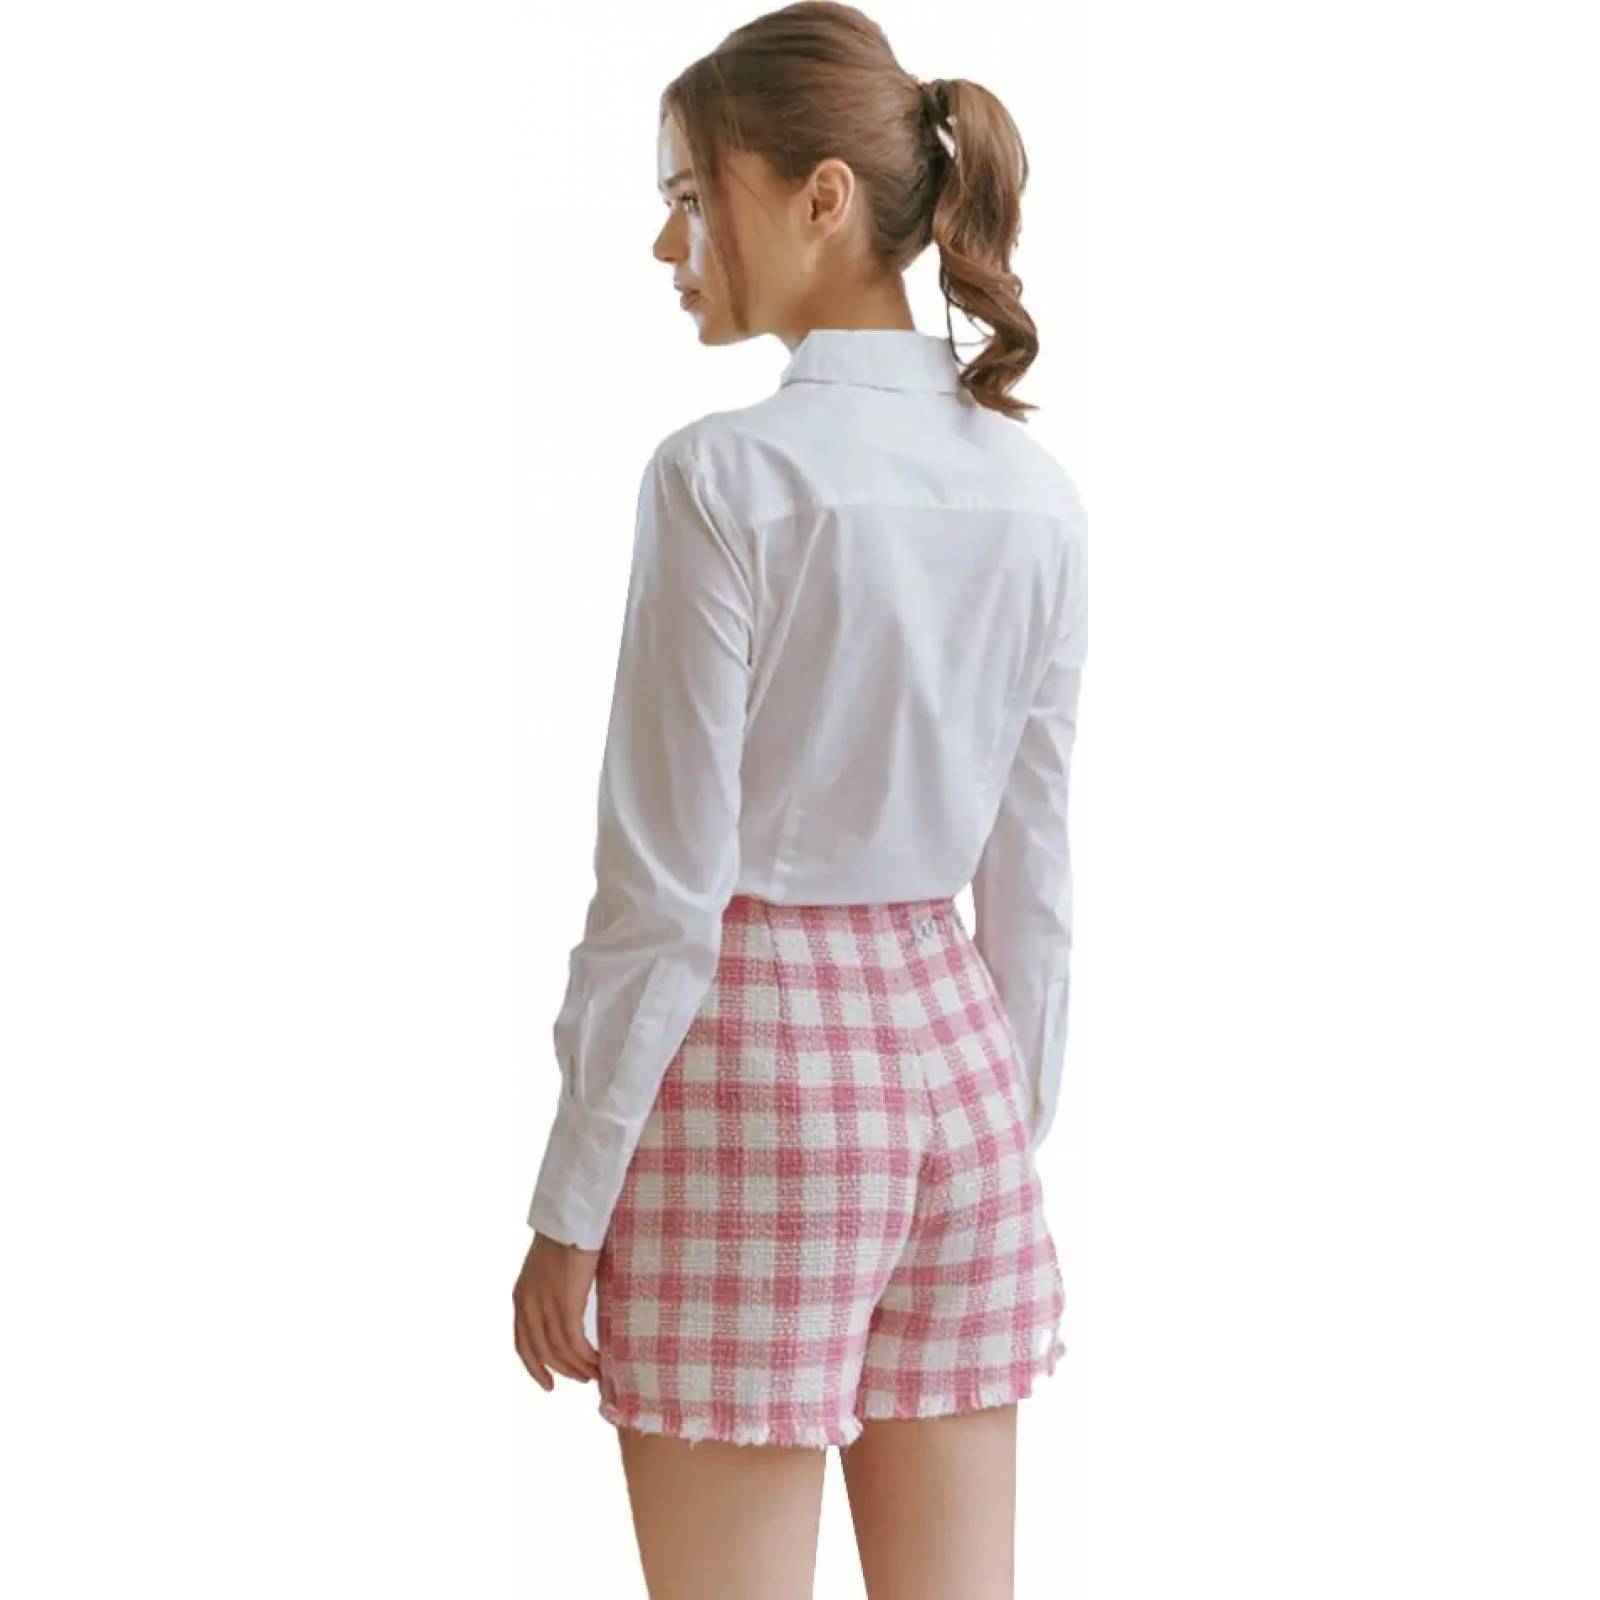 Pantalon de vestir (formal) dama rosa Holly Land modelo P927